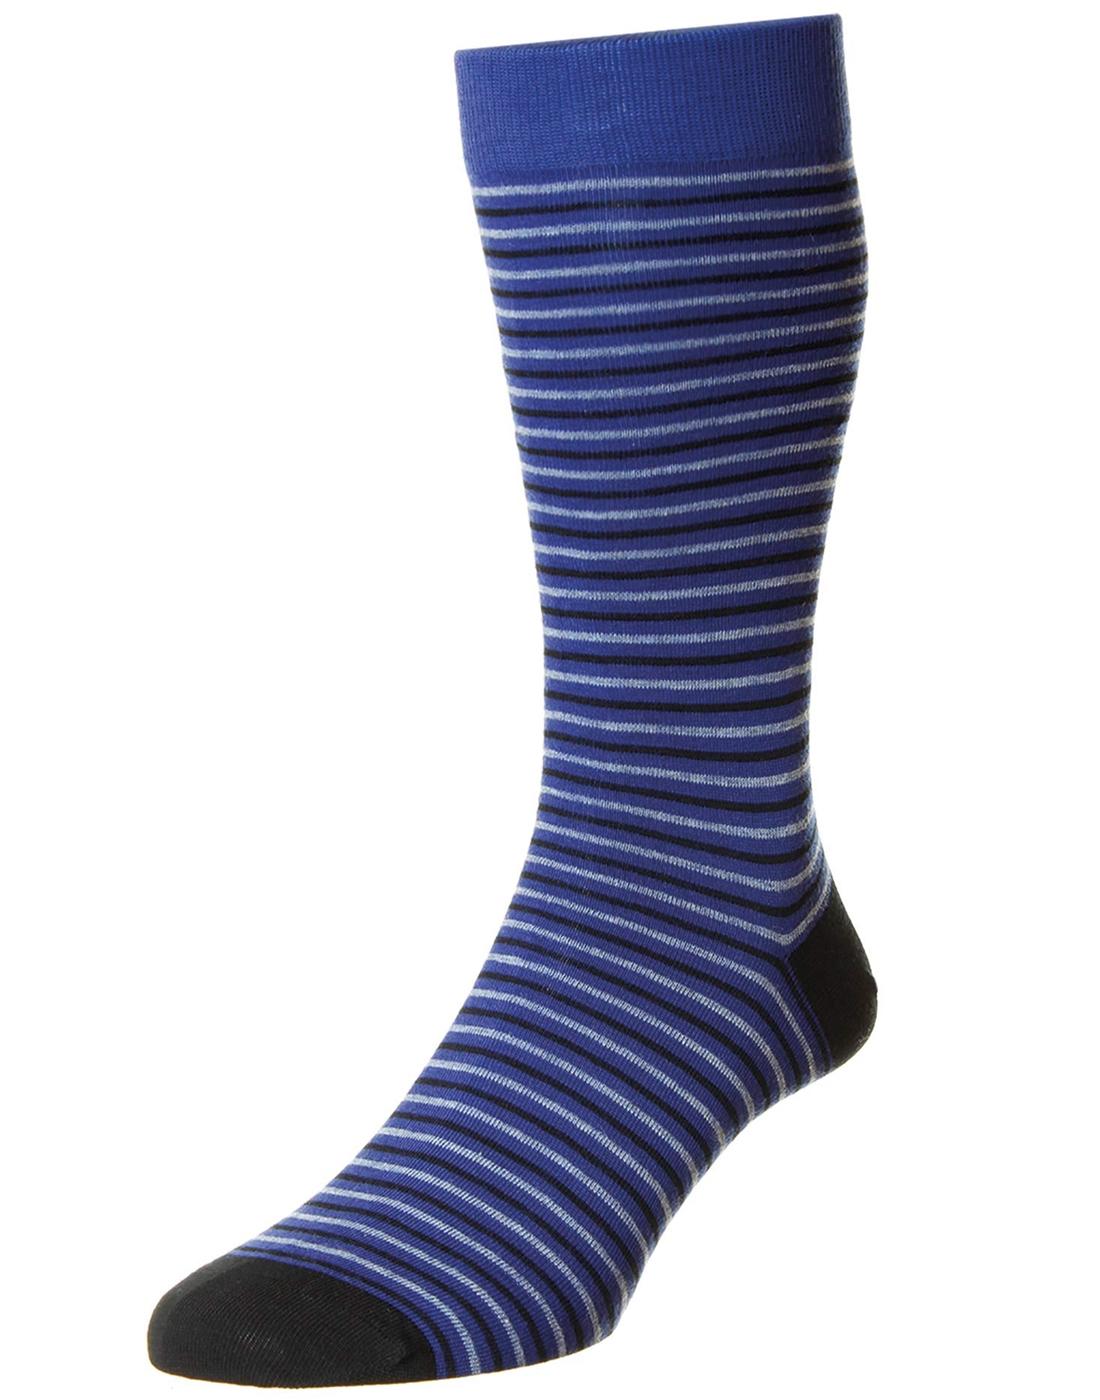 SCOTT-NICHOL Retro Striped Made in England Men's Socks in Blue